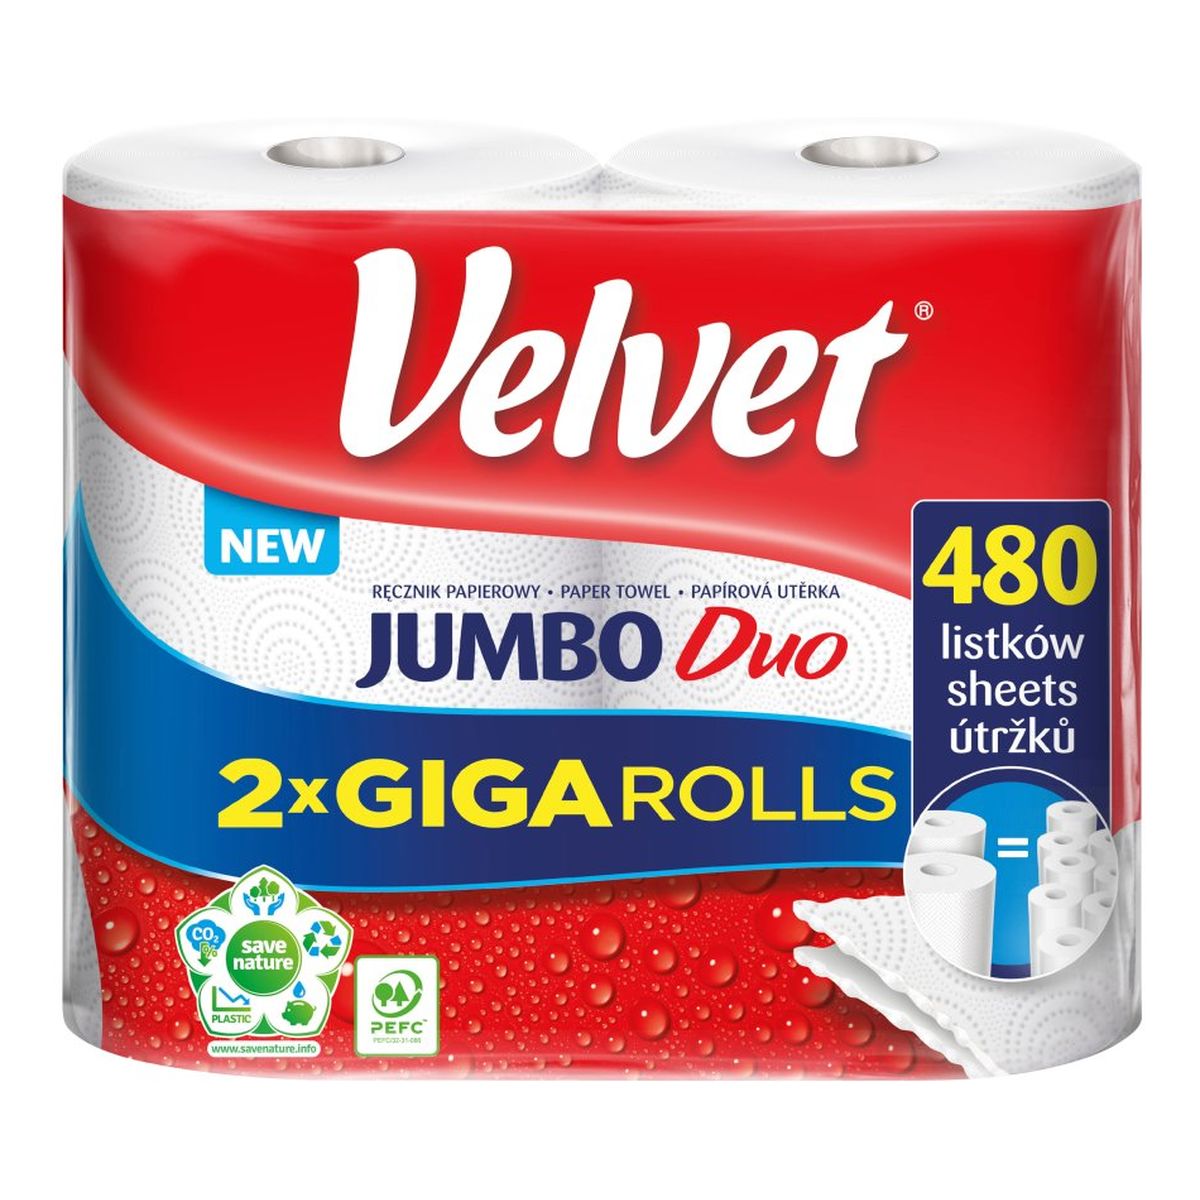 Velvet Jumbo Duo Ręcznik papierowy